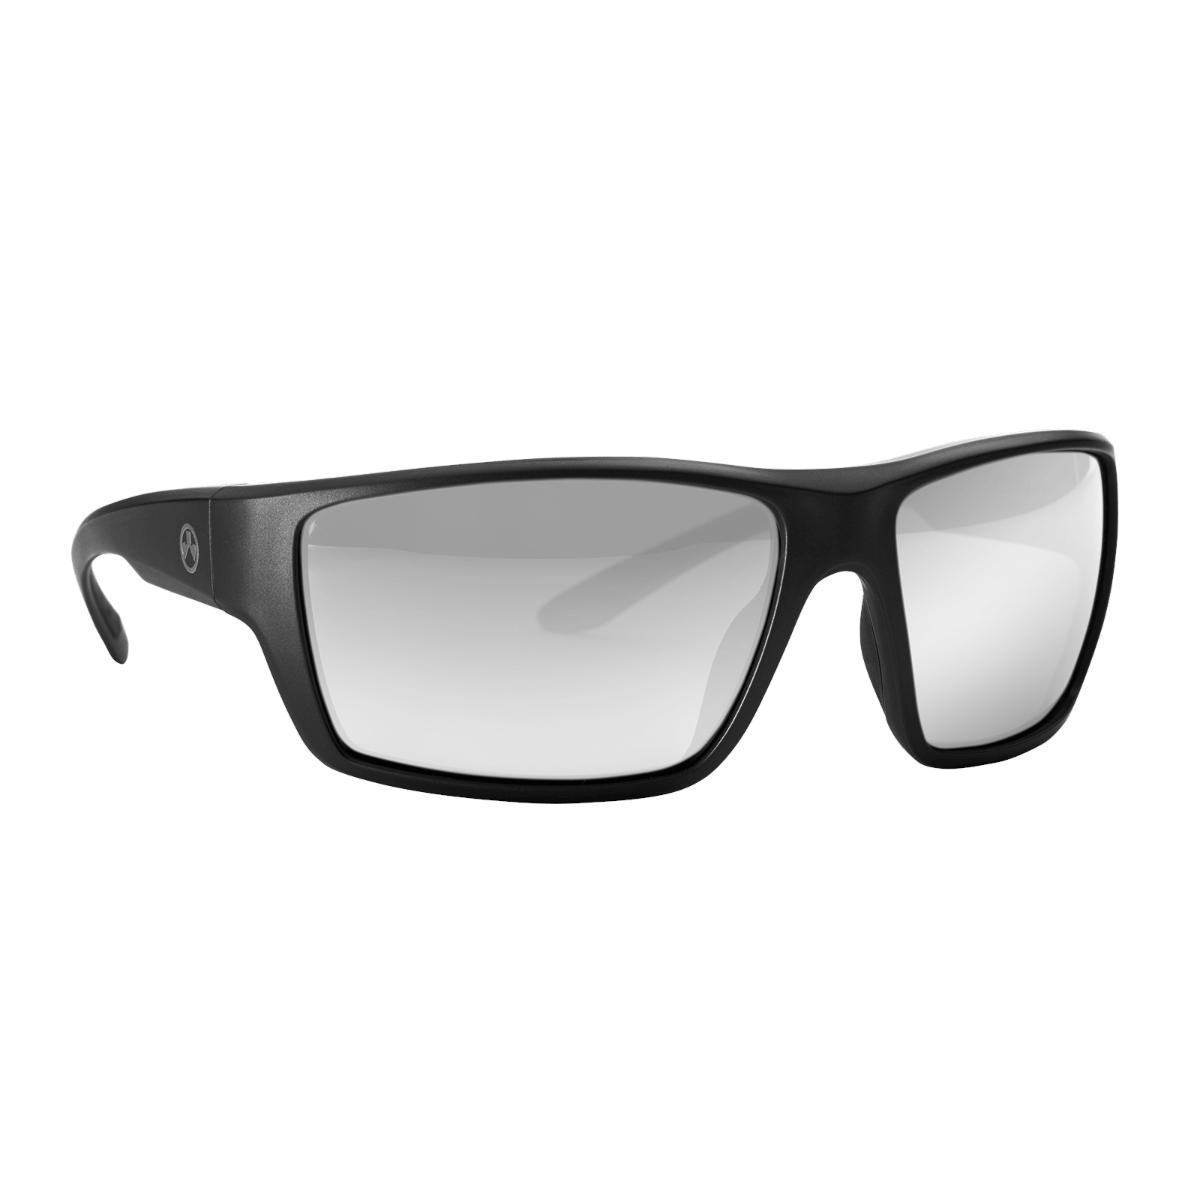 U.S. Eyewear Magpul – Elite Gear Polarized Terrain